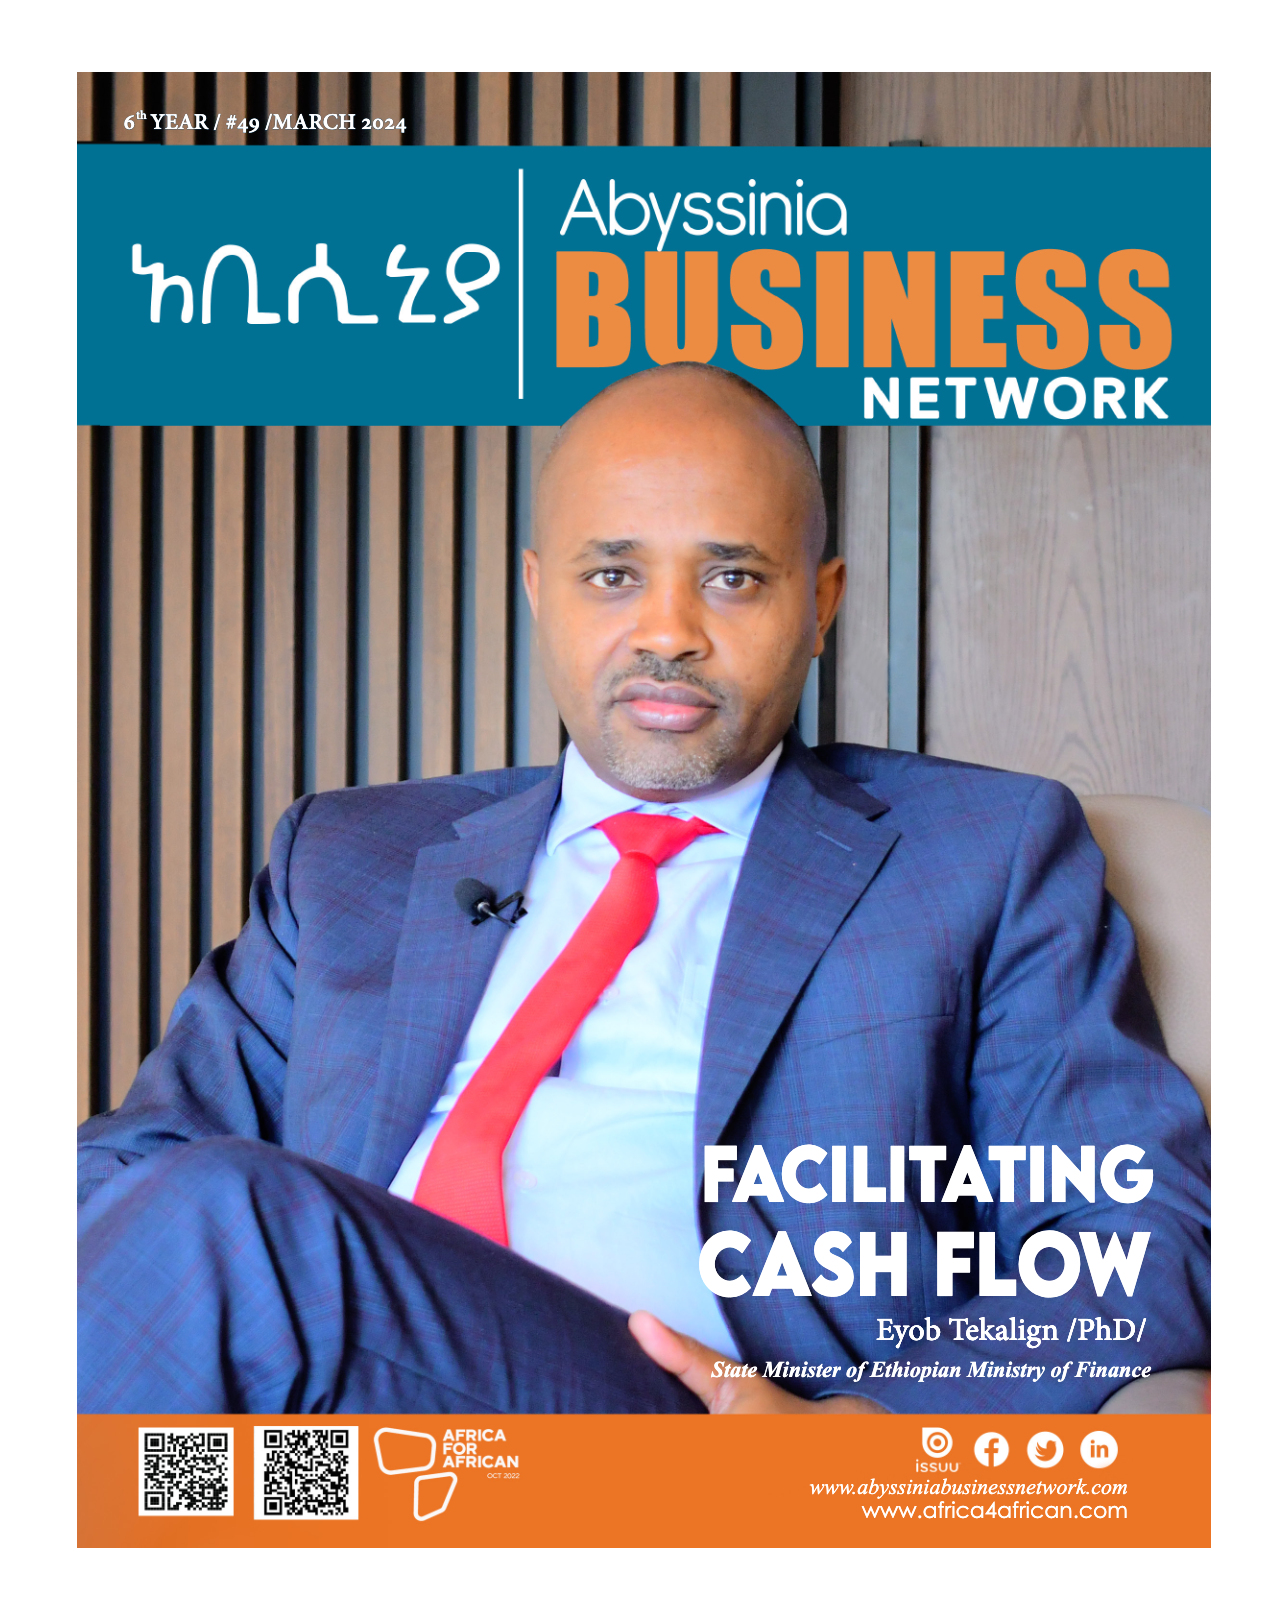 Daniel Tiruneh Abyssinia Business Network